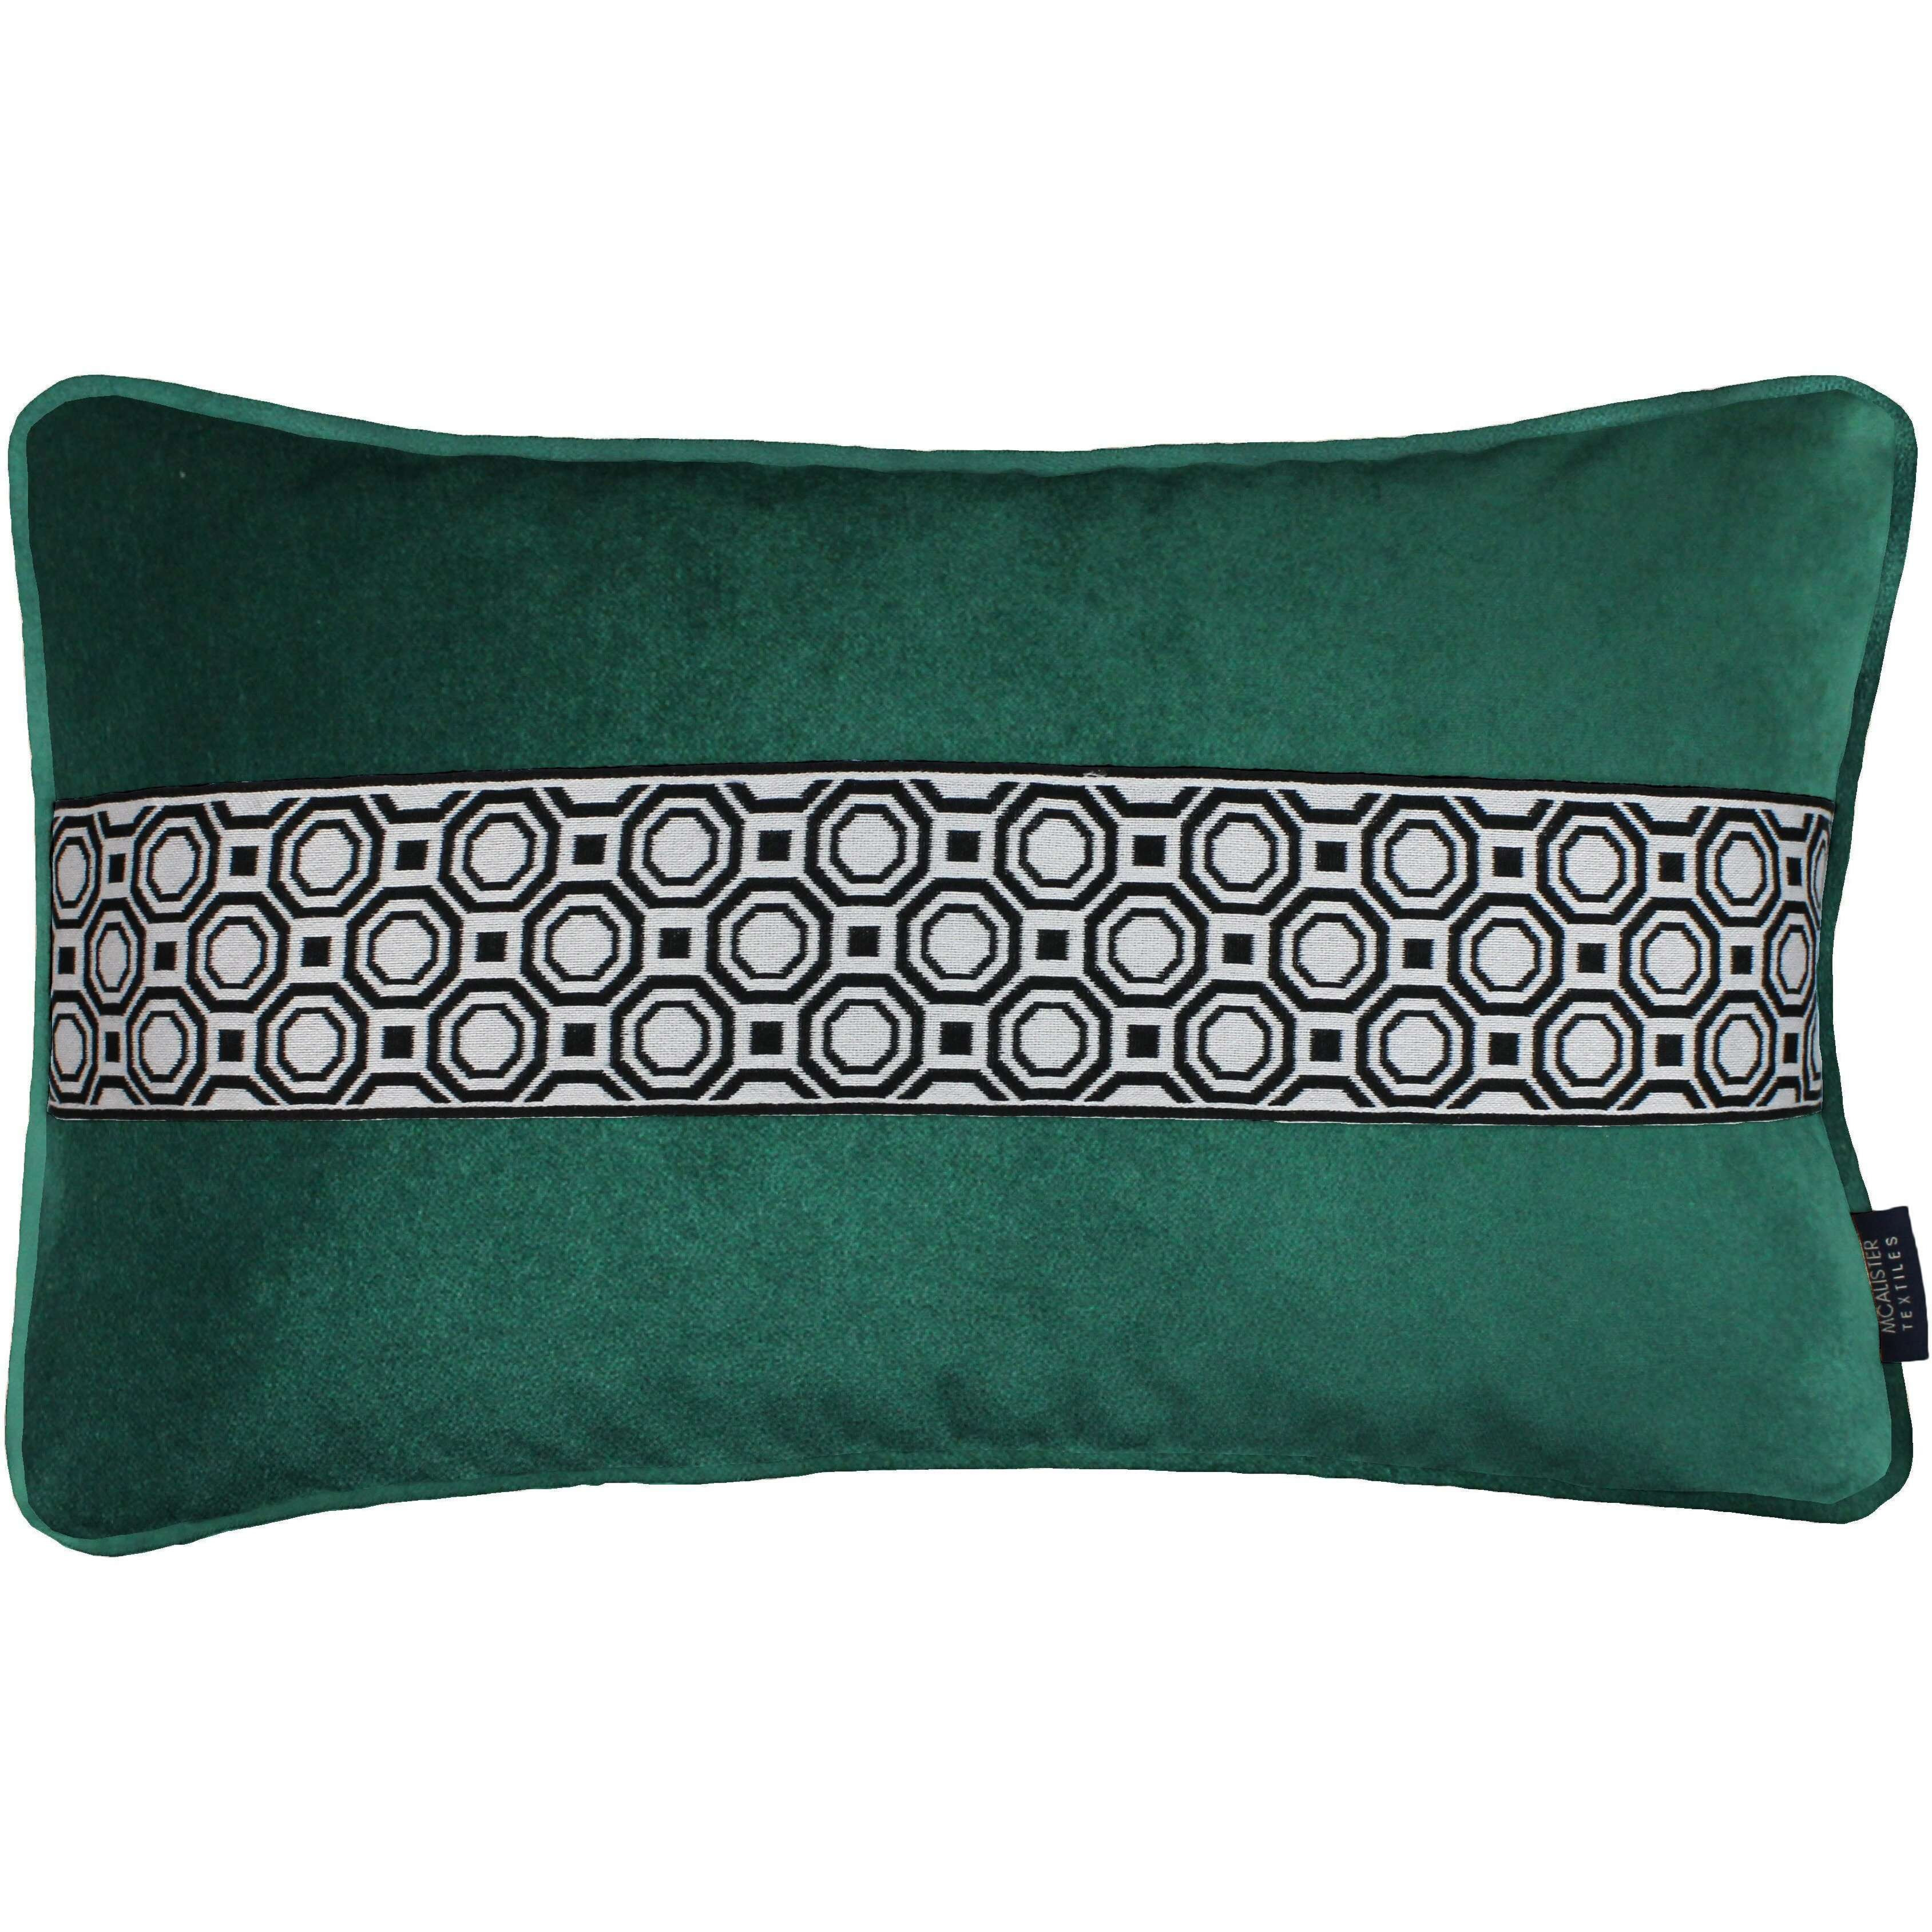 Cancun Striped Emerald Green Velvet Pillow, Cover Only / 50cm x 30cm